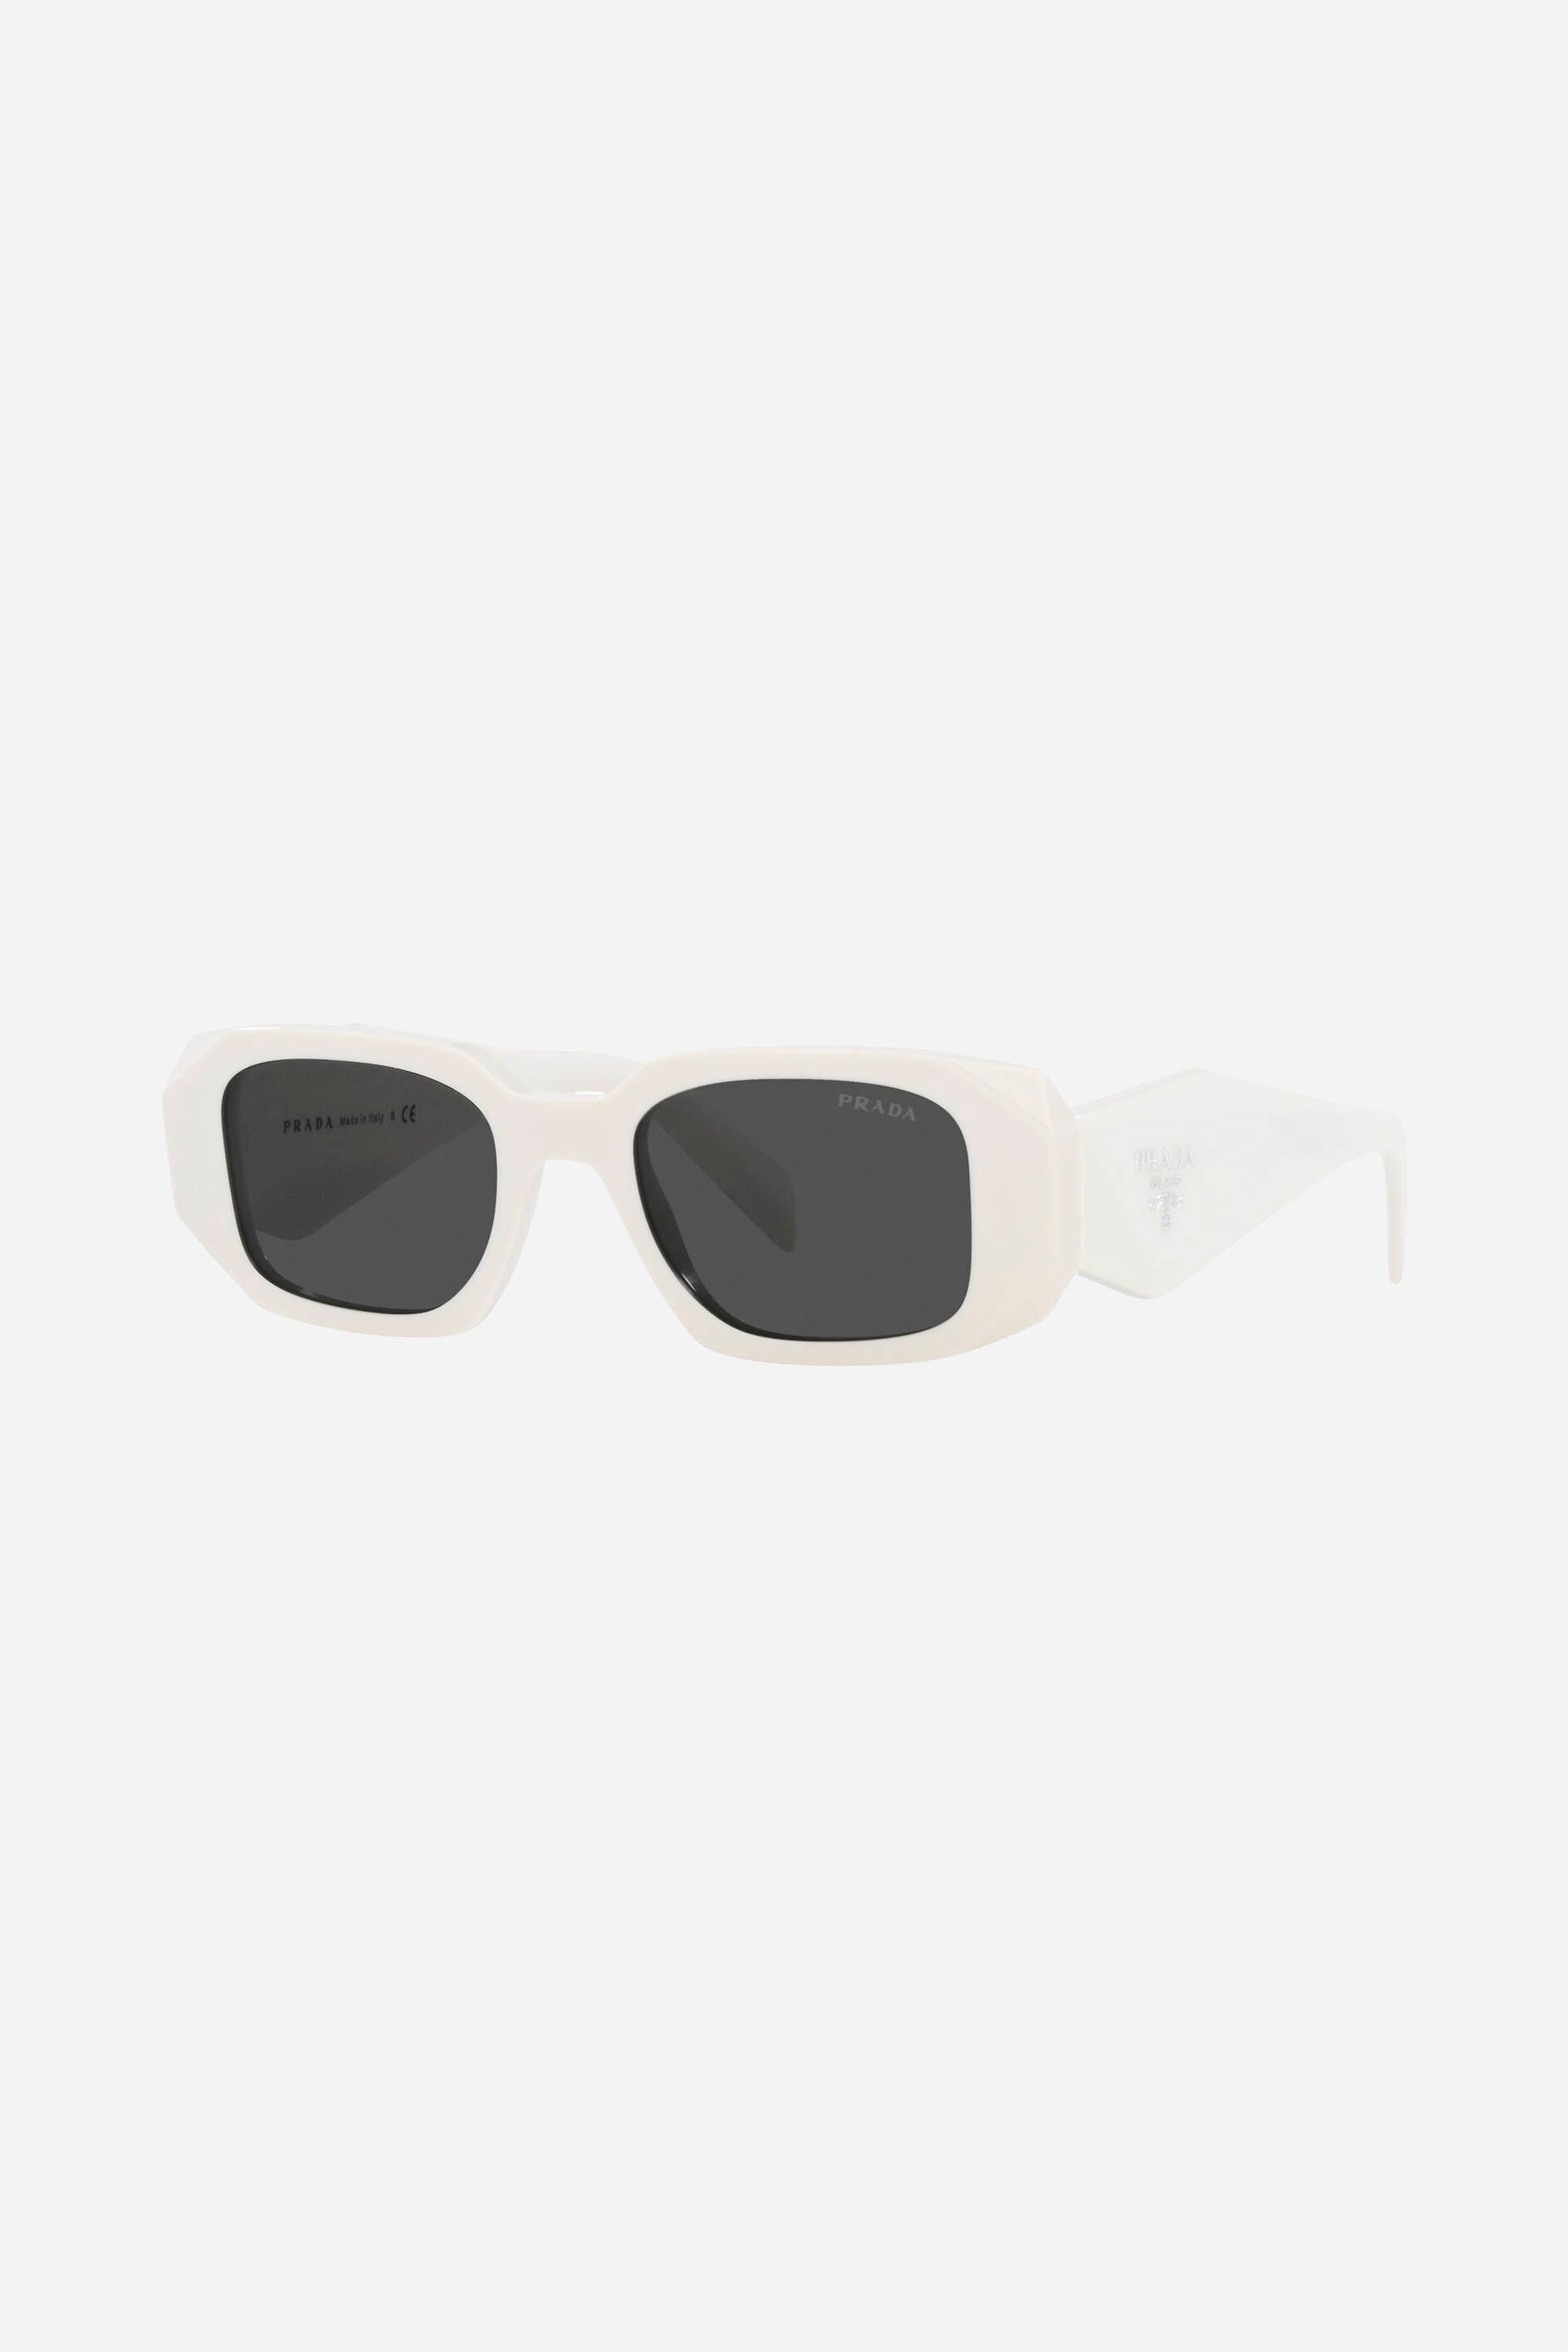 Available October 22 -Prada symbol white oval sunglasses - Eyewear Club